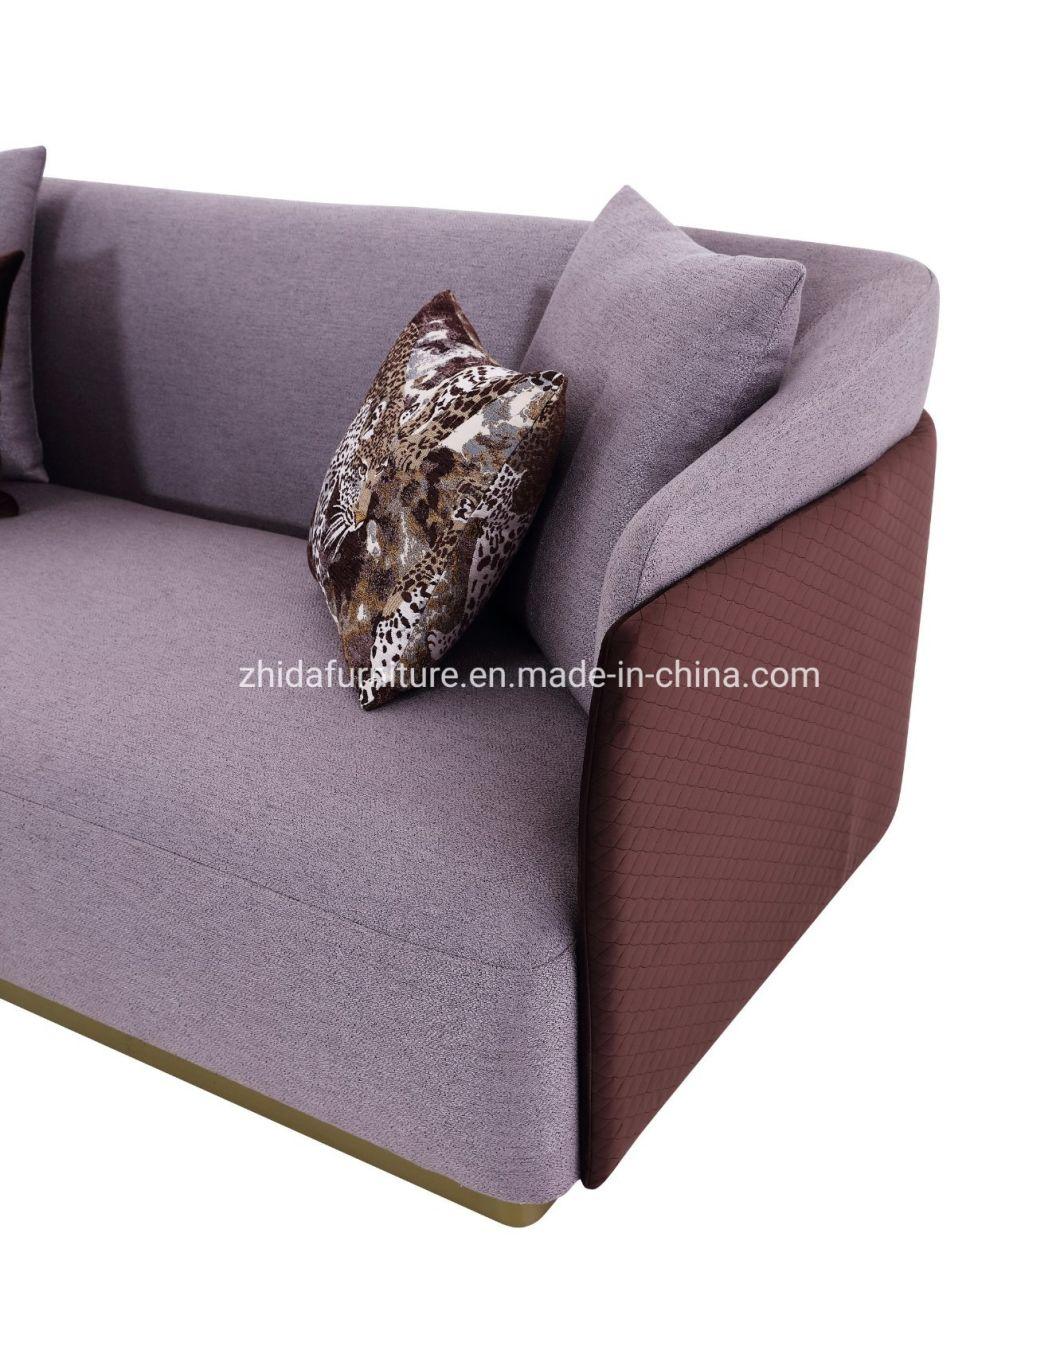 Modern Living Room Home Reception Leisure Fabric Corner Recliner Leather Sofa